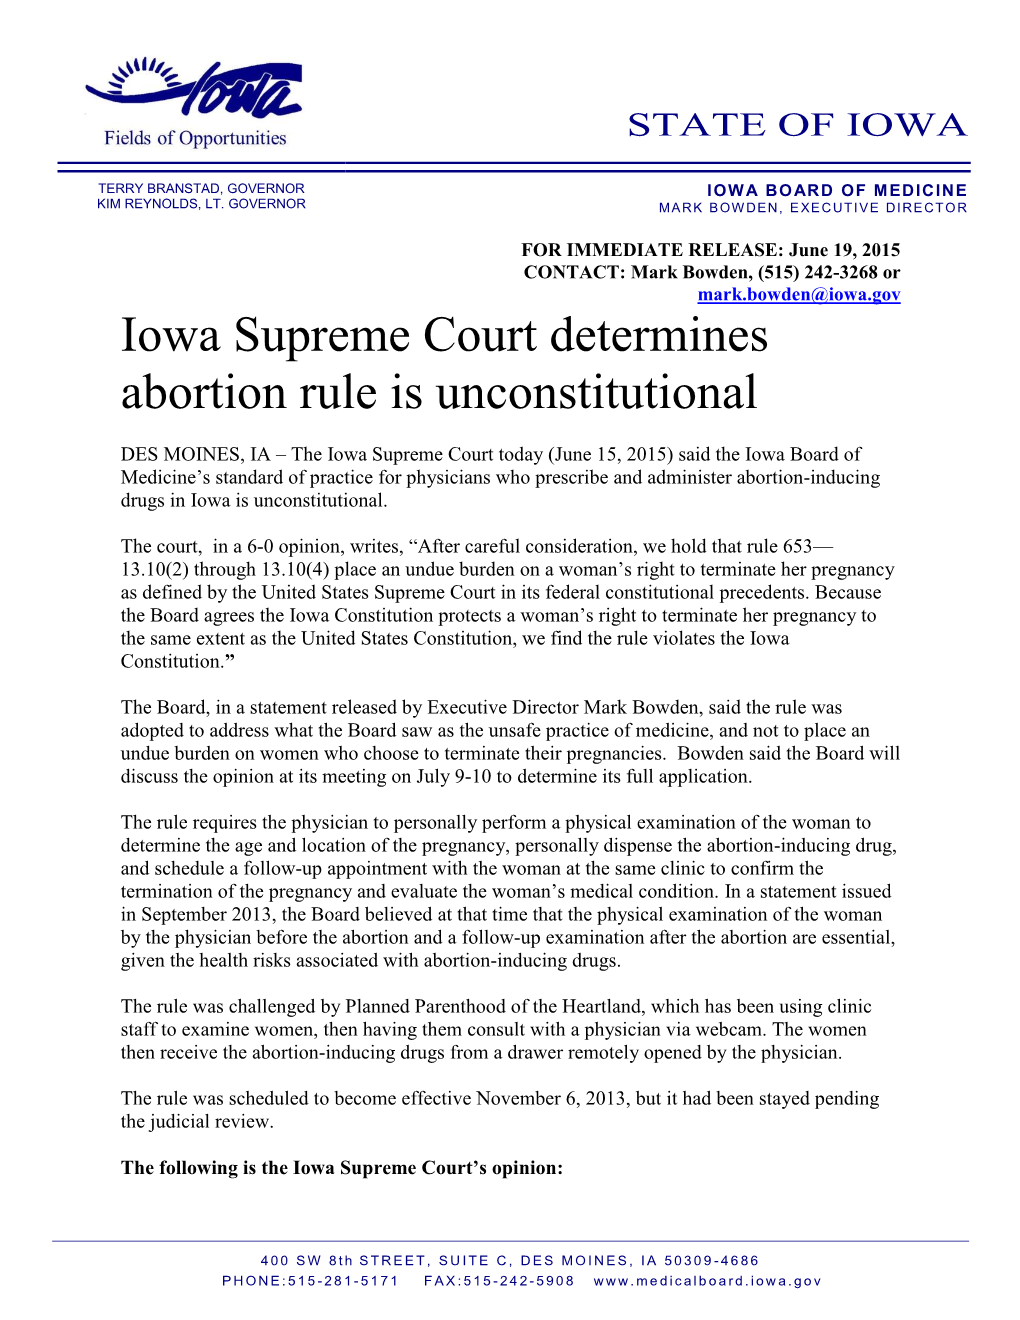 Iowa Supreme Court Determines Abortion Rule Is Unconstitutional